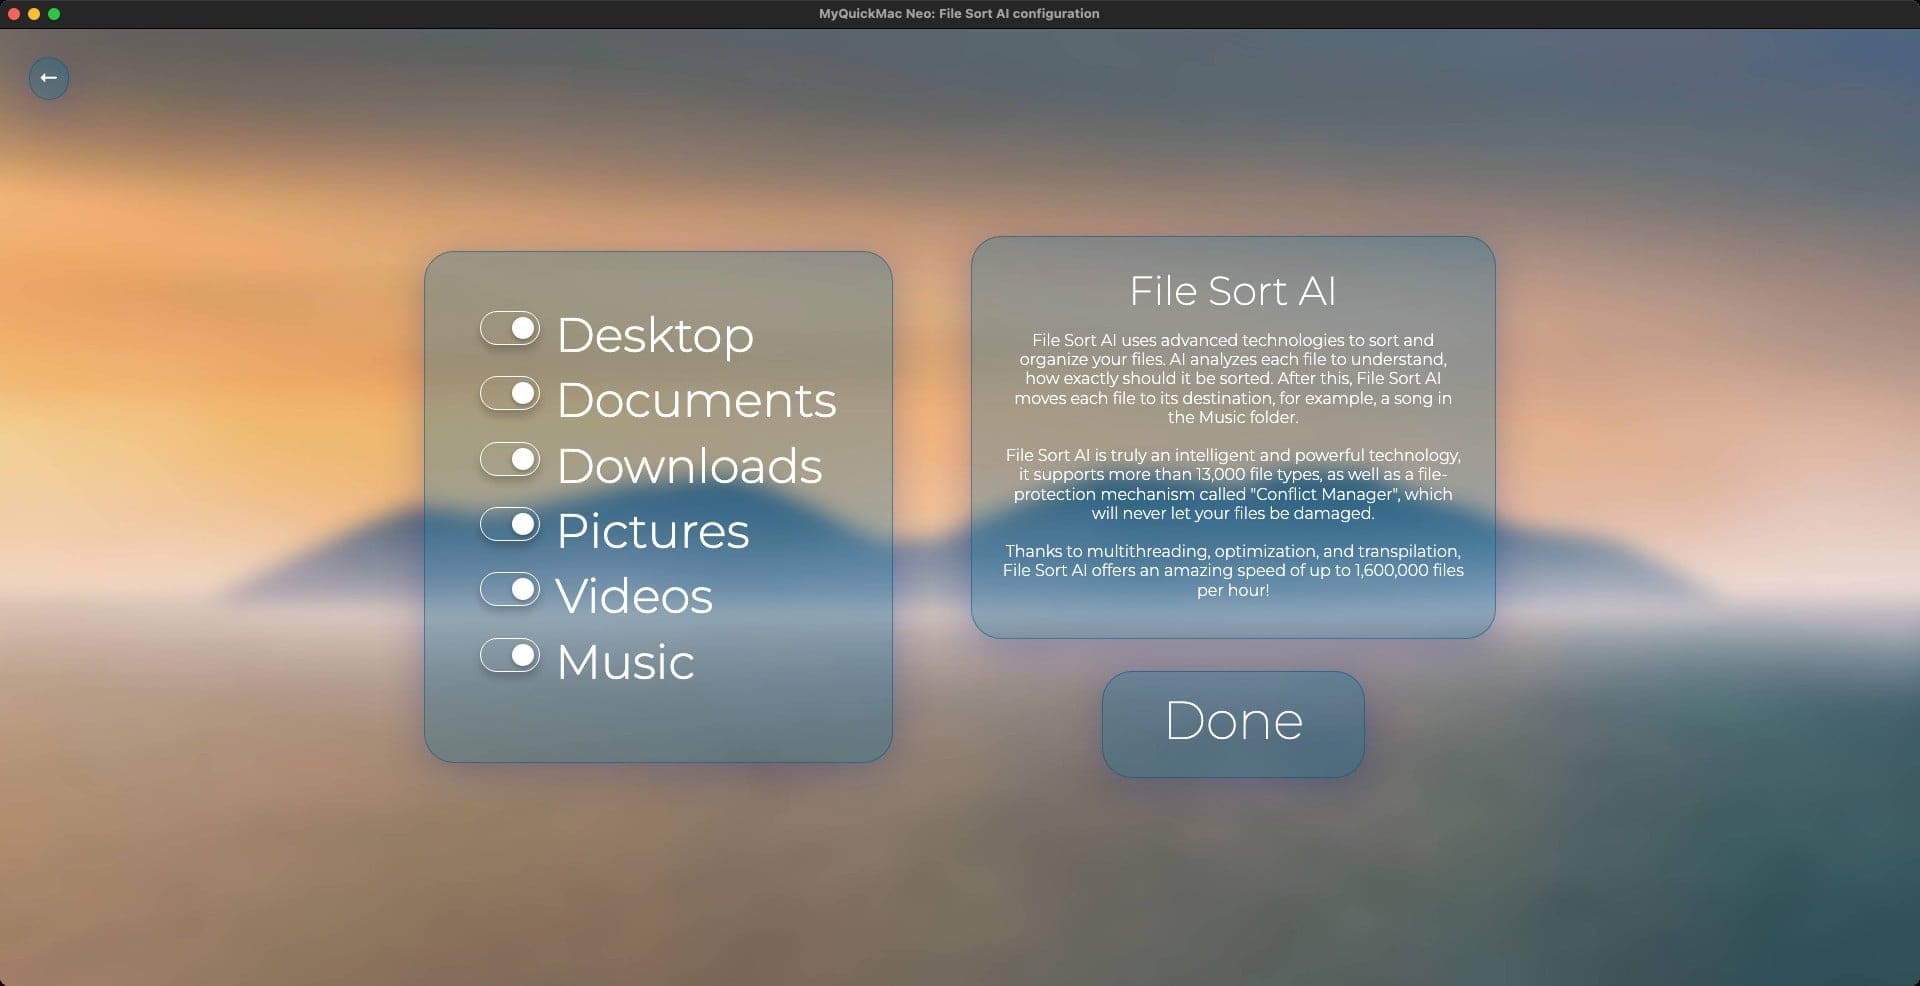 Screenshot of 'File Sort AI configuration' window of MyQuickMac Neo